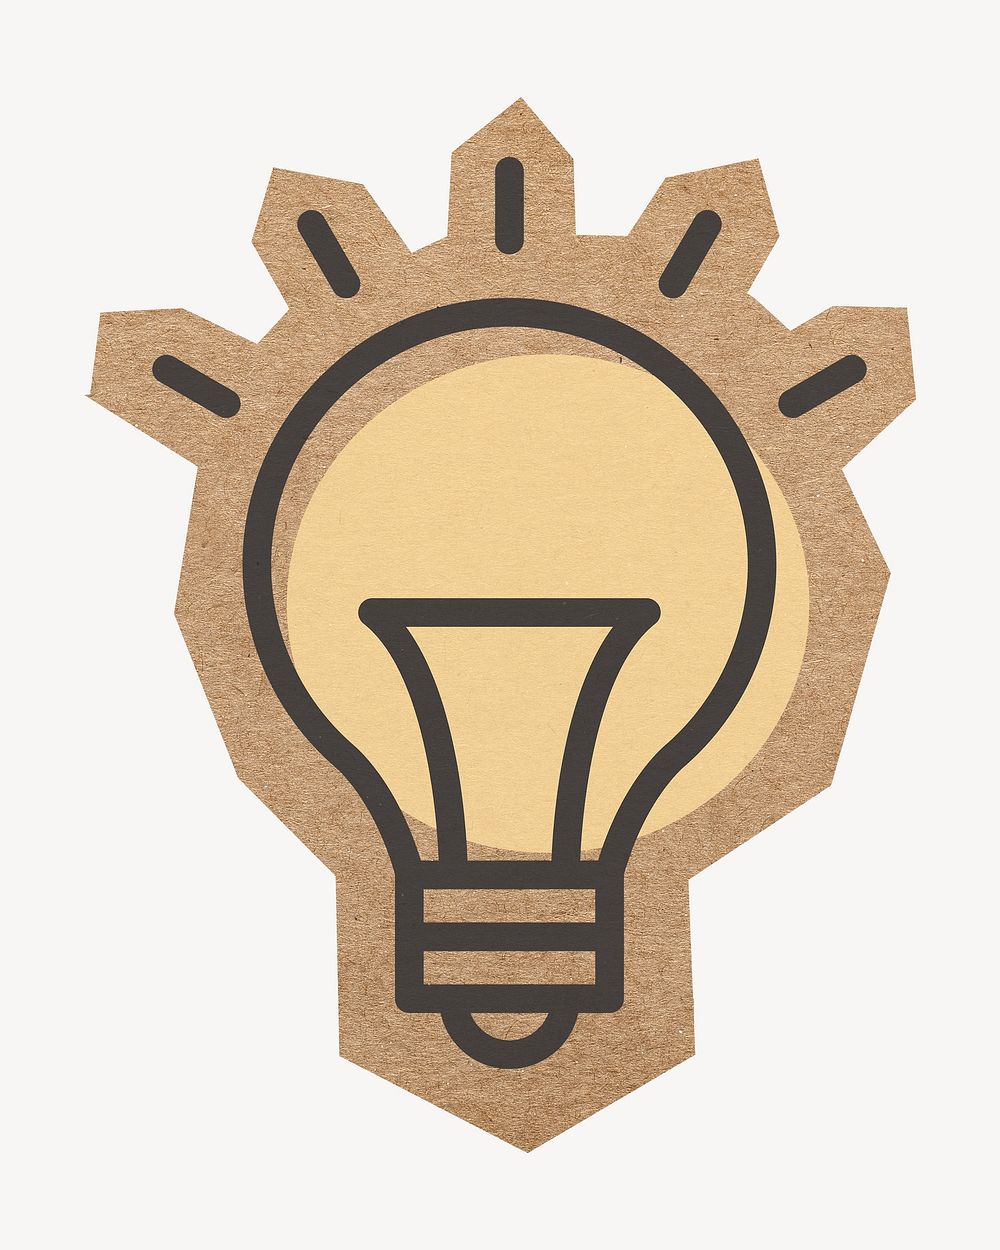 Light bulb icon, cut out paper element